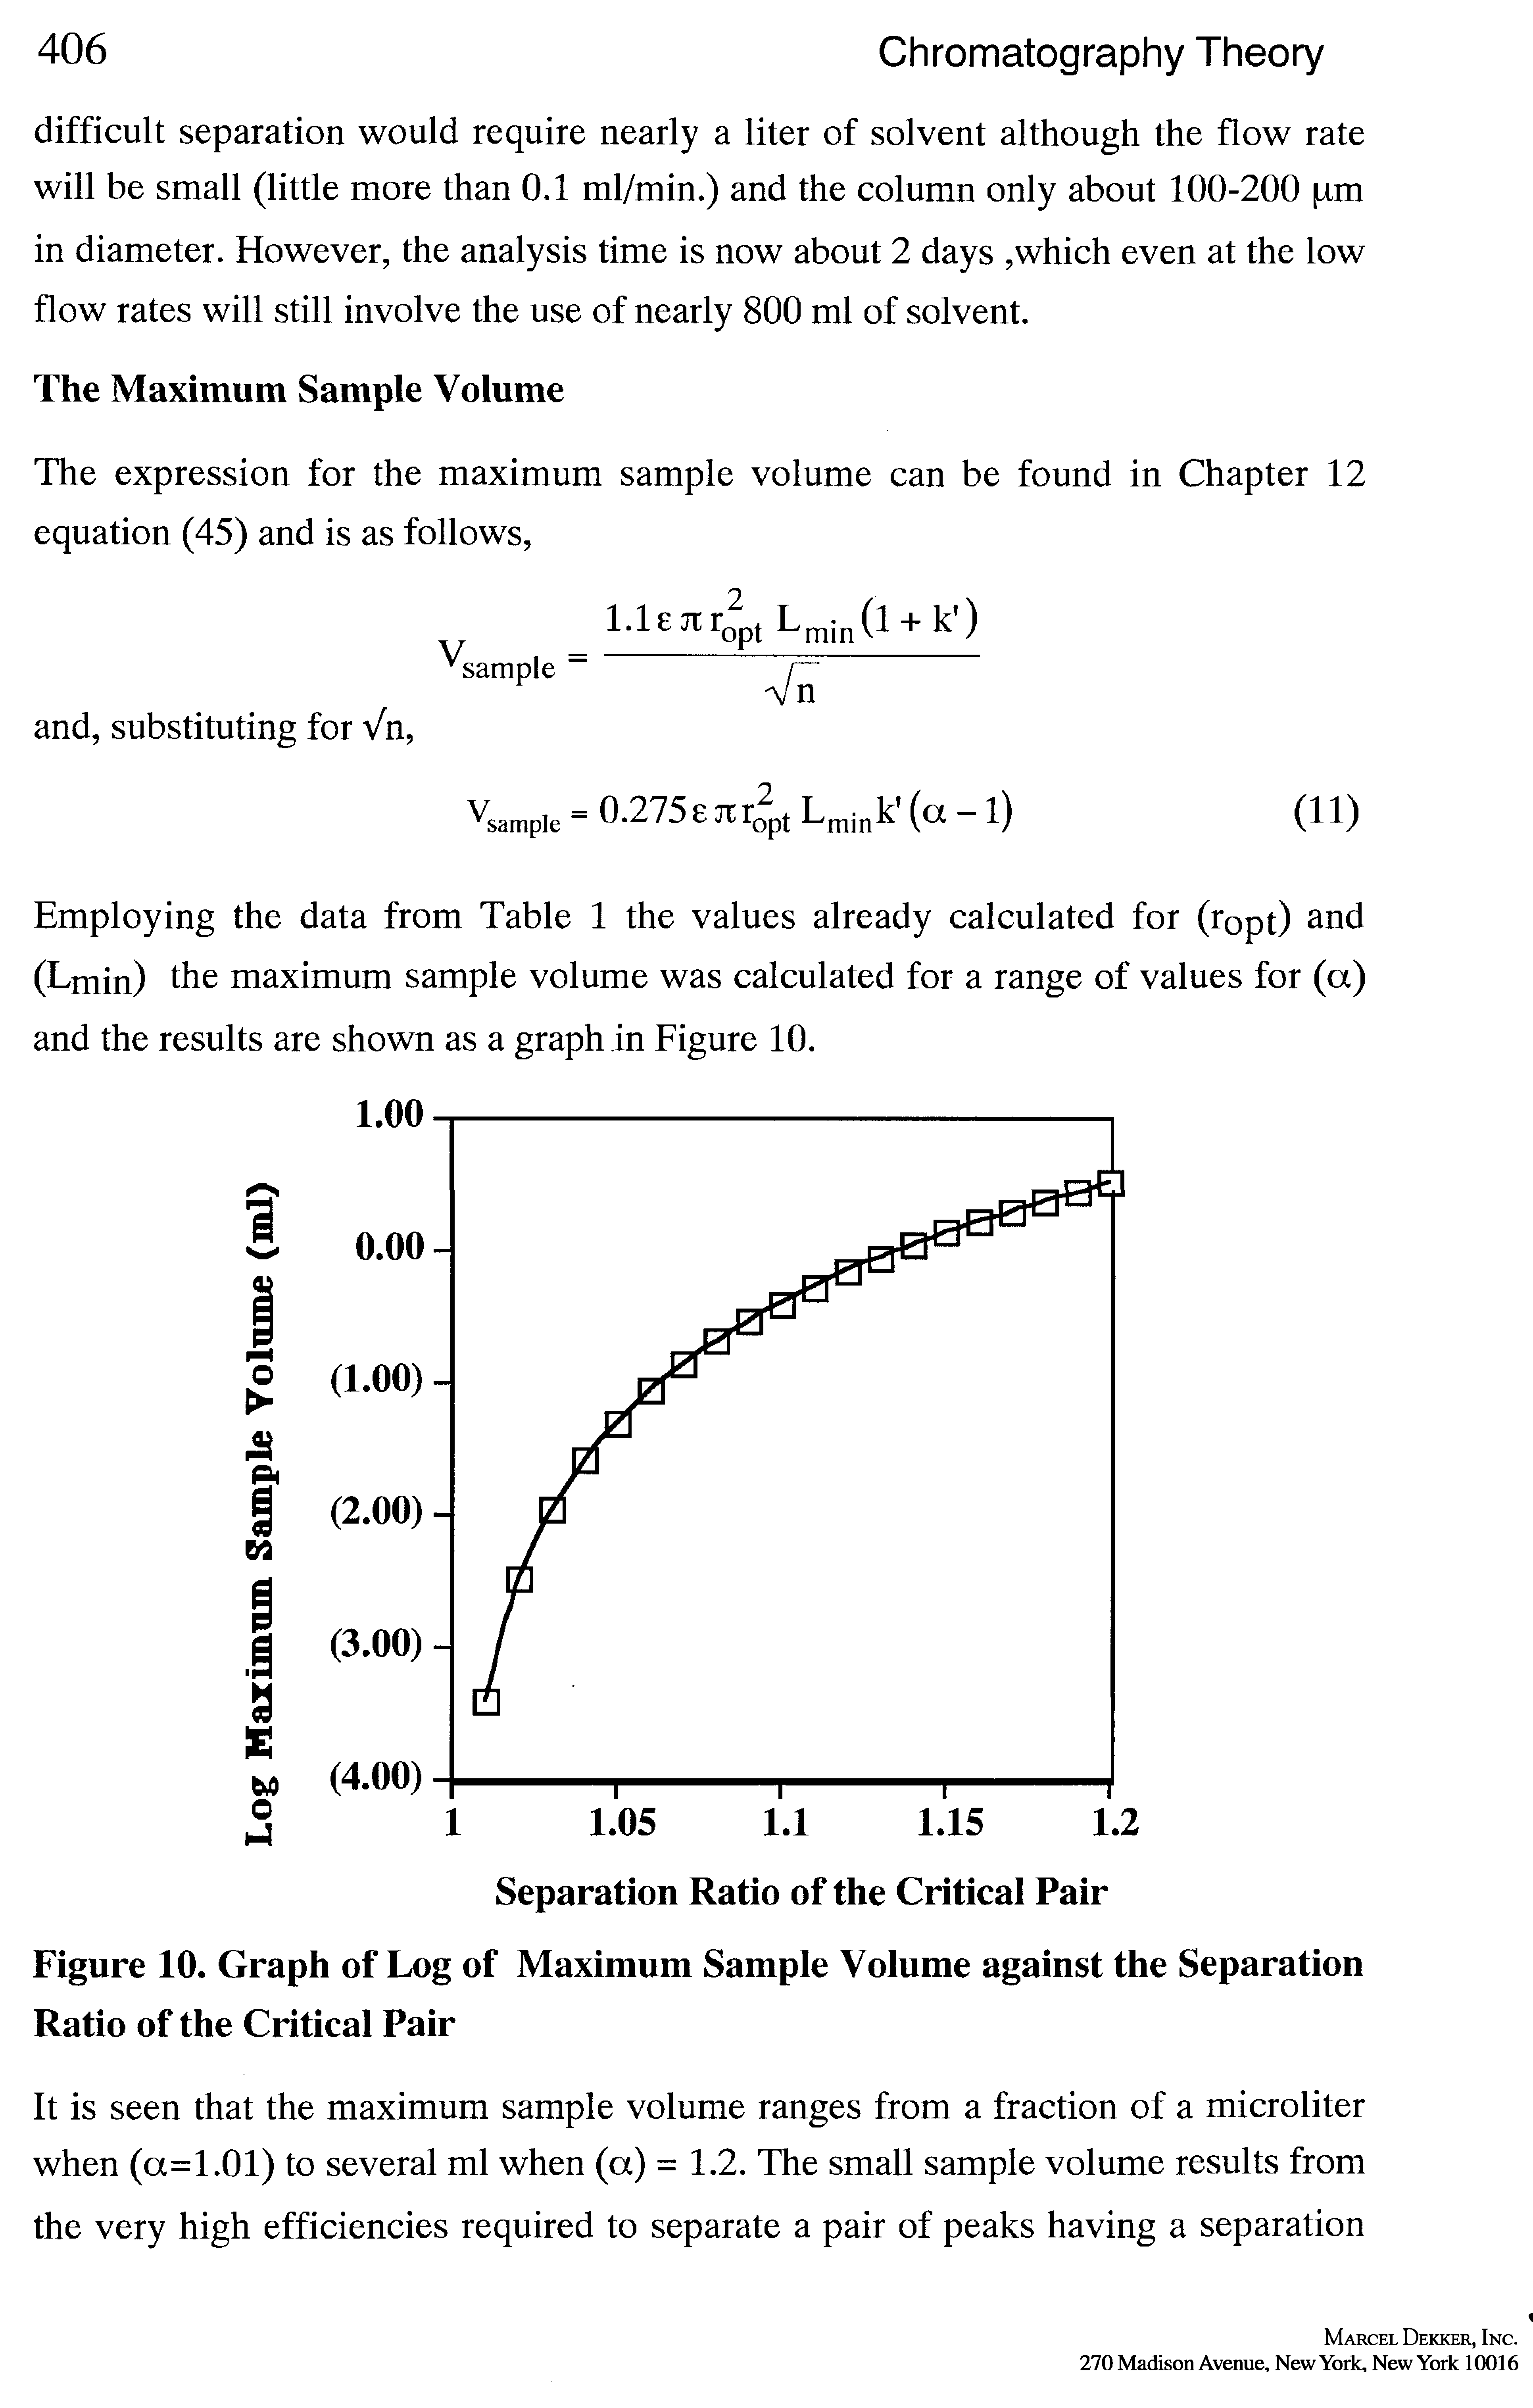 Figure 10. Graph of Log of Maximum Sample Volume against the Separation Ratio of the Critical Pair...